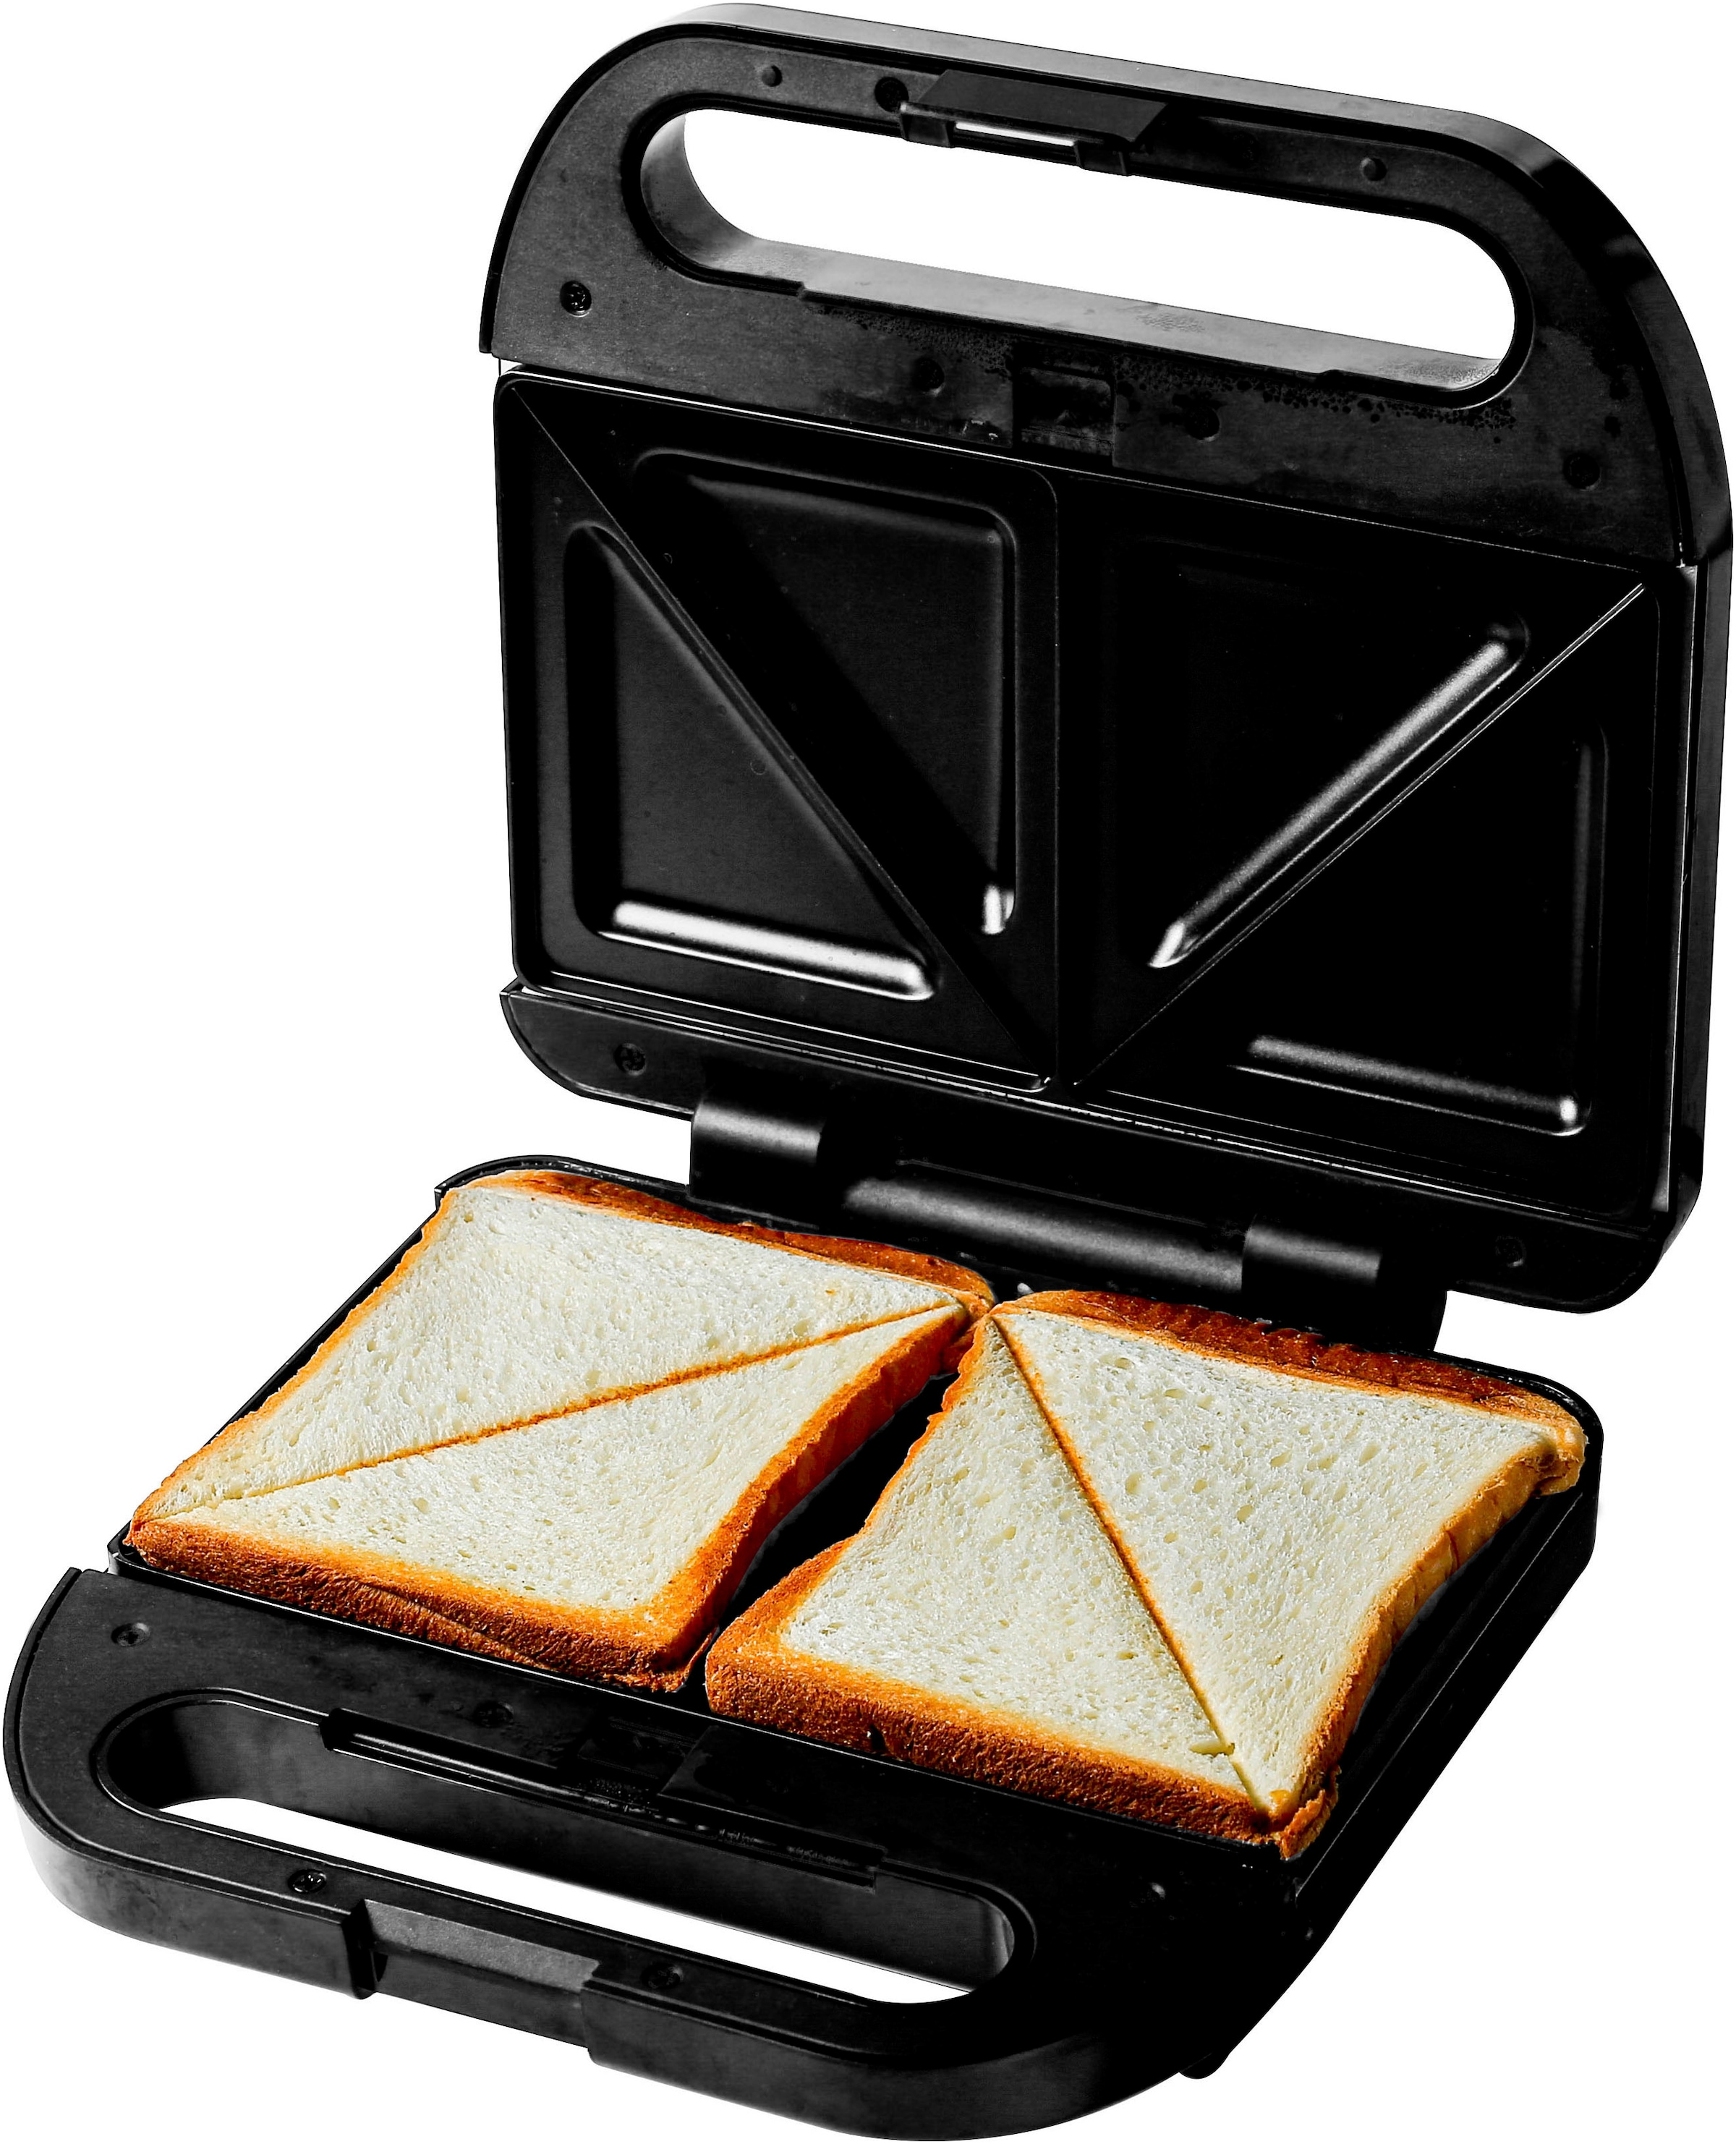 Hanseatic Waffeleisen »HWM750BD 3-in-1-Sandwichmaker, Waffeleisen & Kontaktgrill«, 750 W, antihaftbeschichtete, abnehmbare Platten